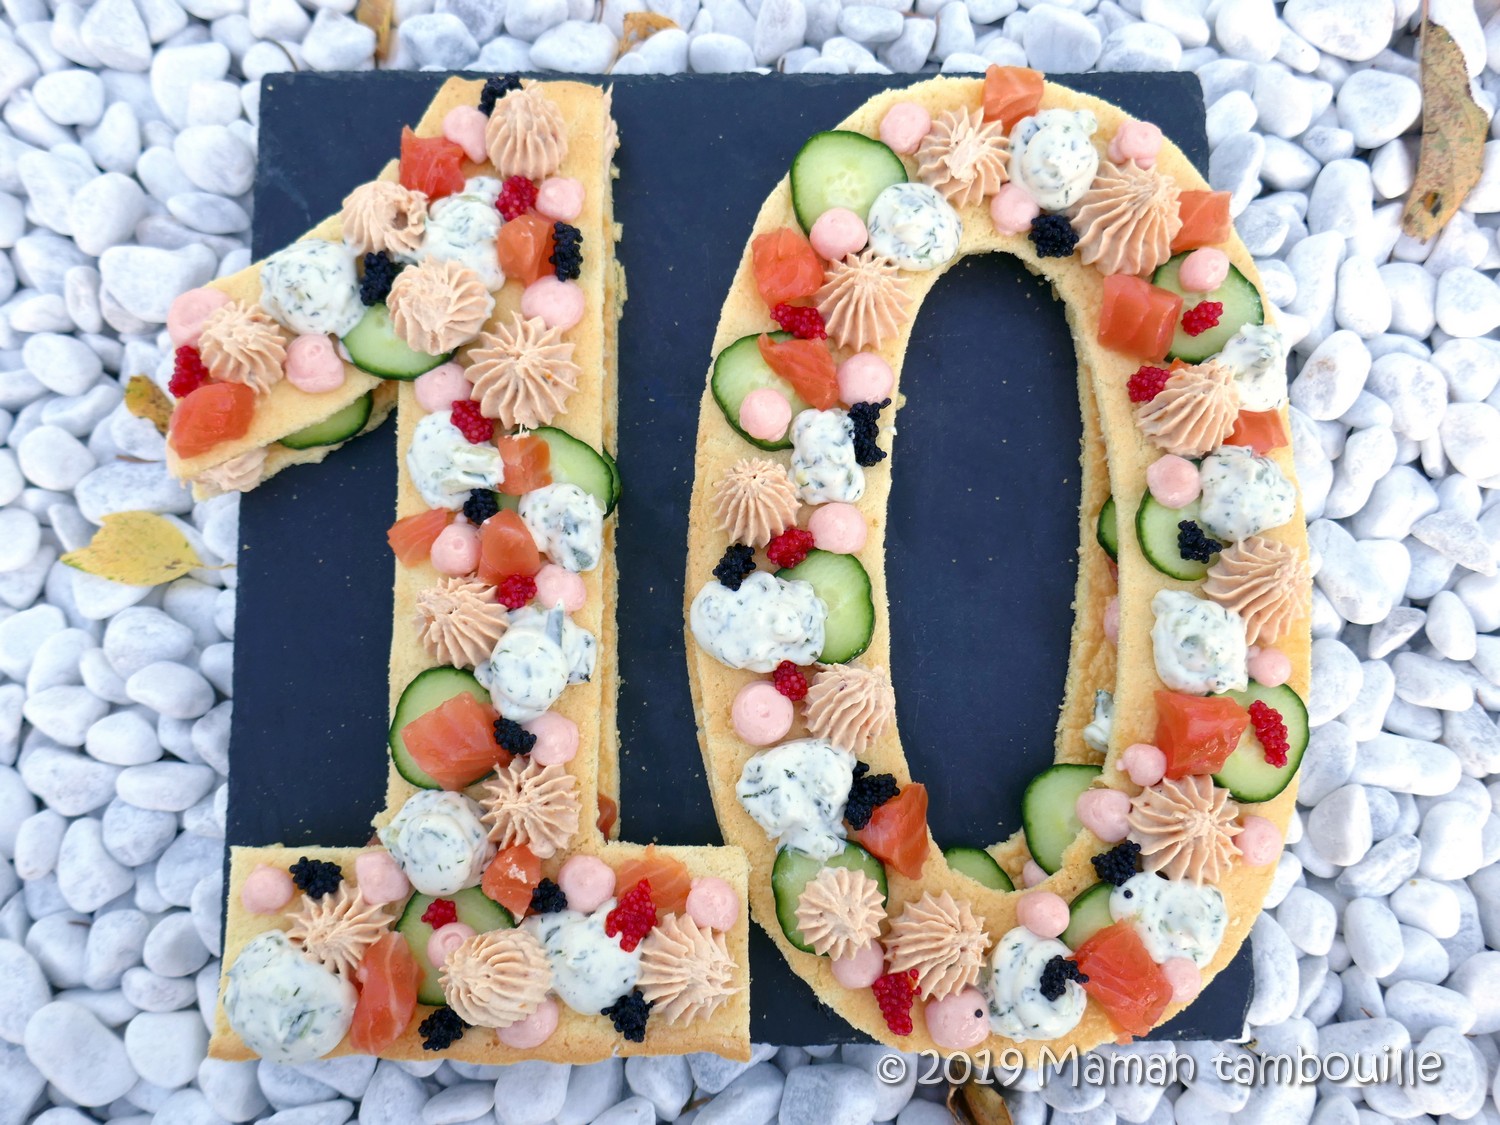 Number Cake De La Mer Defi Gourmand 10 Ans De Cuisine Addict Maman Tambouille